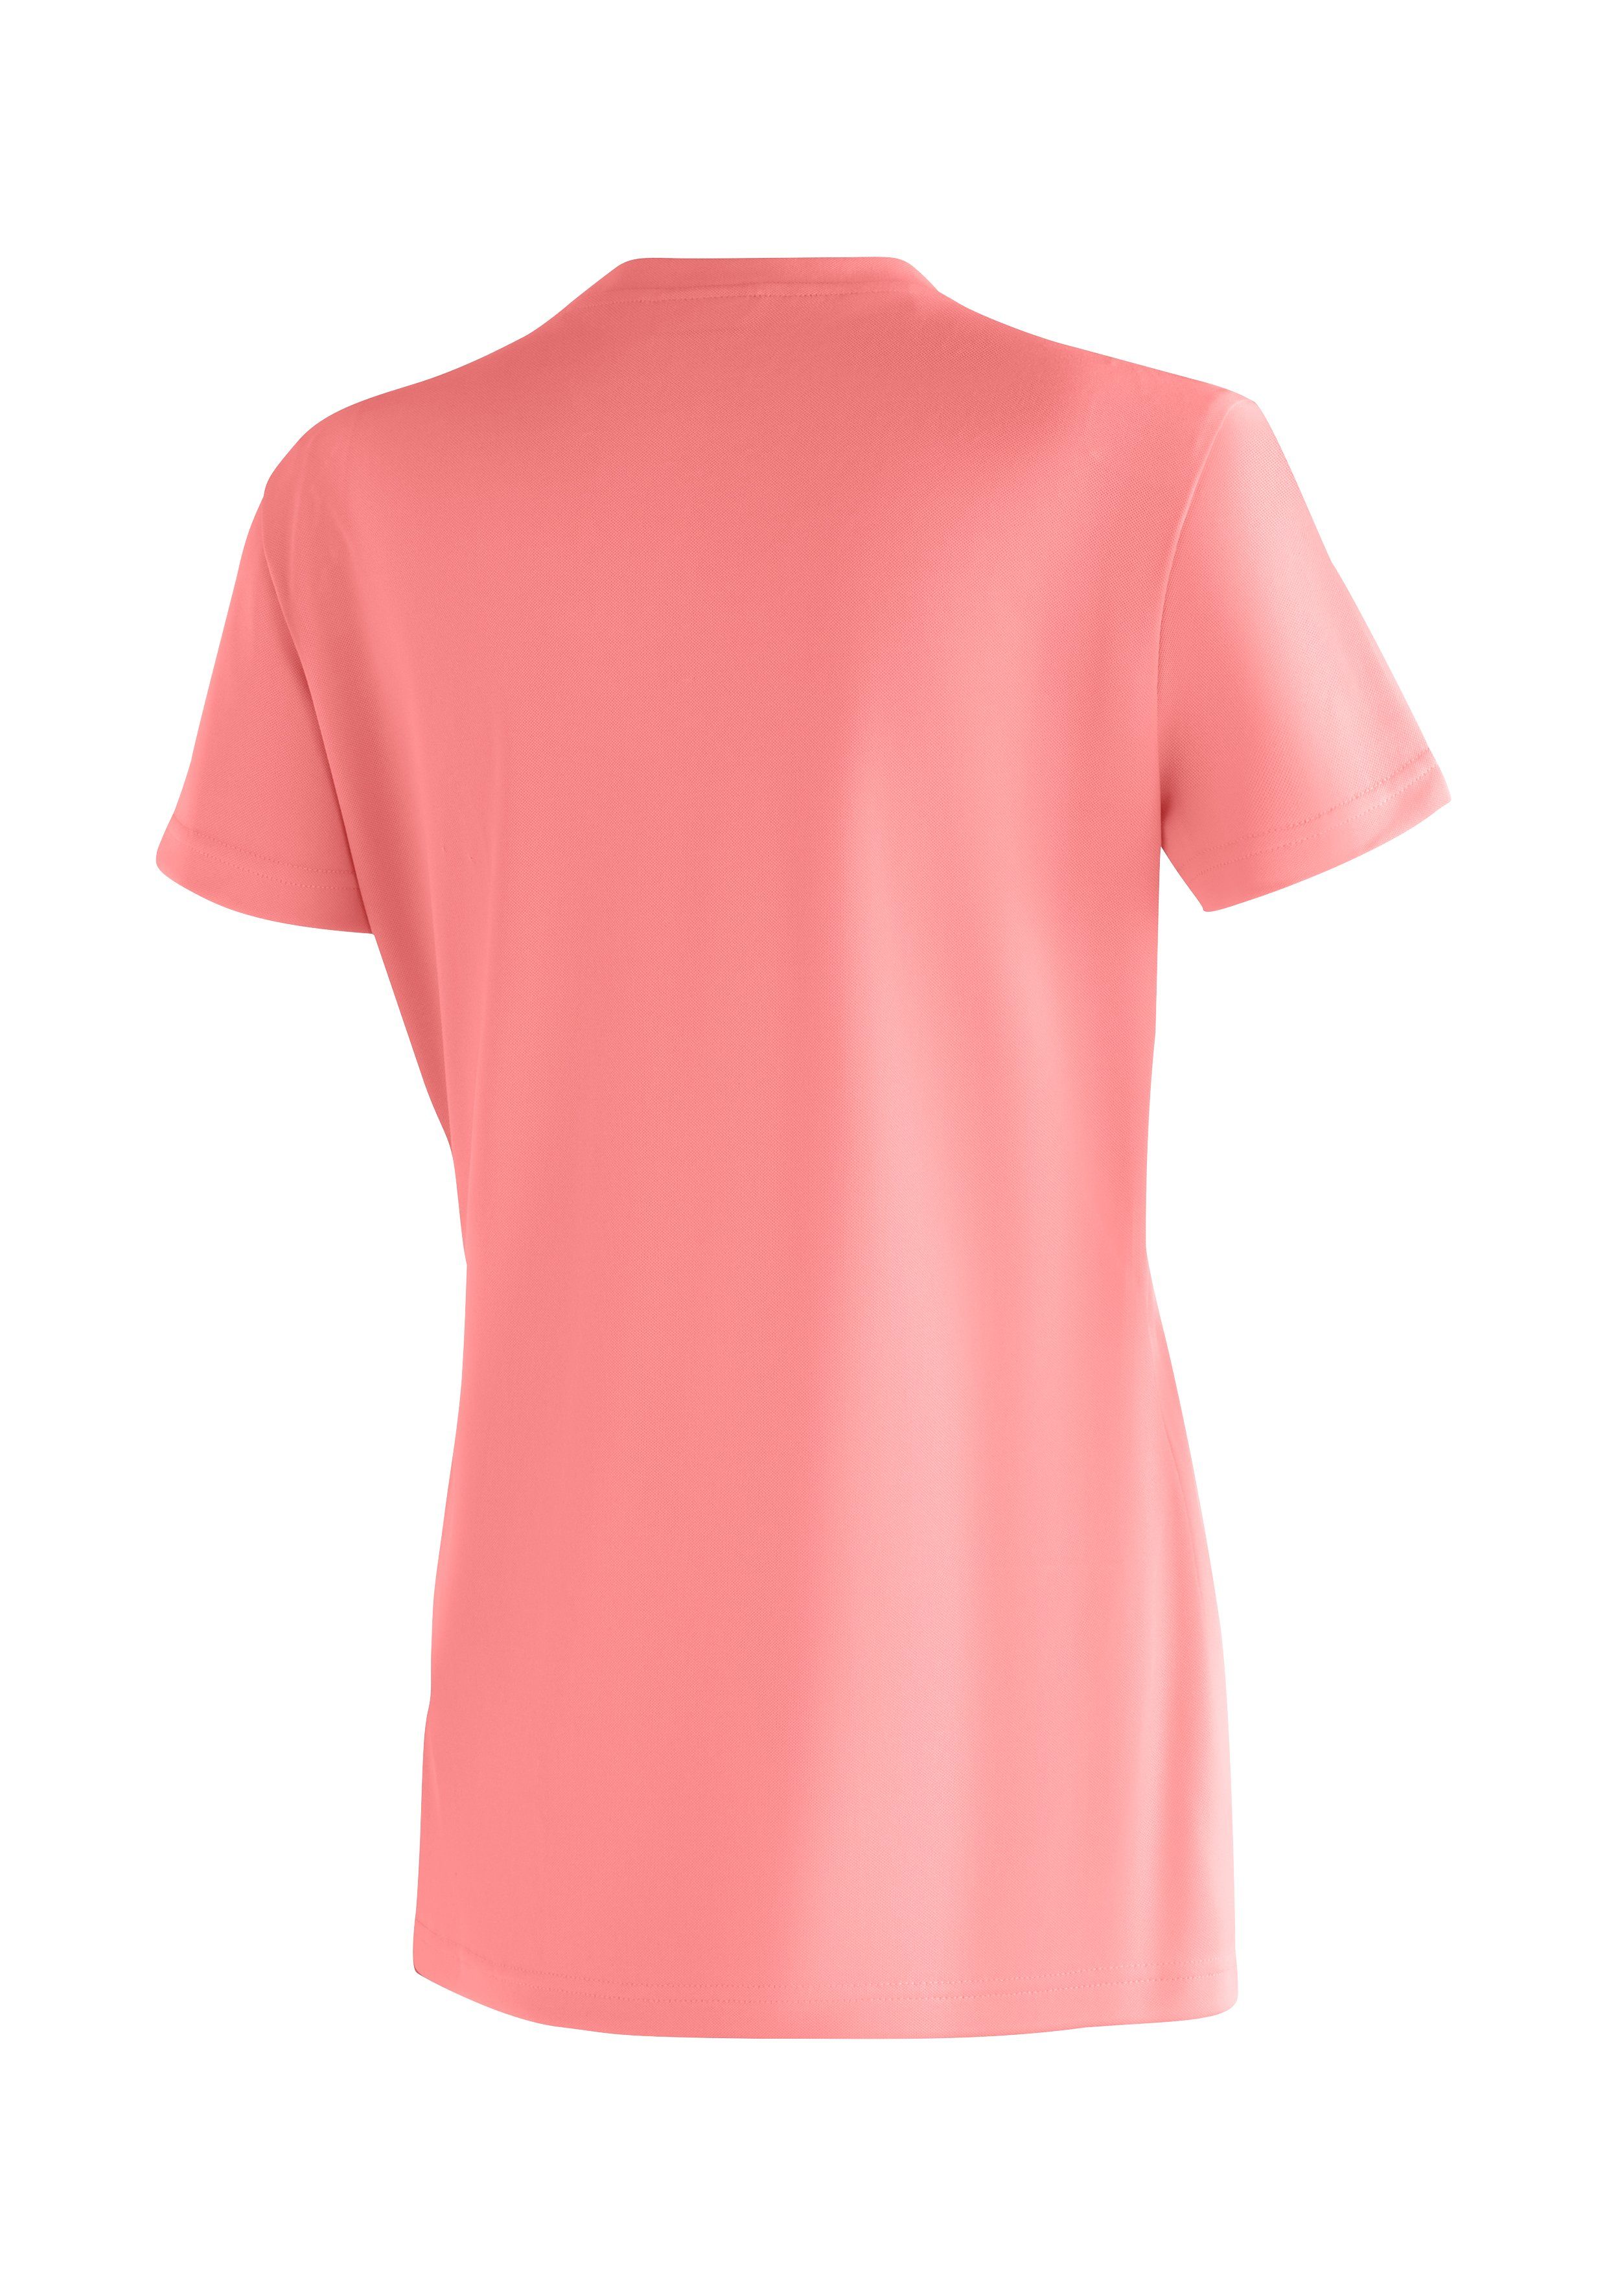 Maier Passformstabilität mit Print Waltraut perlrosa Sports Funktionsshirt Funktional T-Shirt vielseitiges hoher